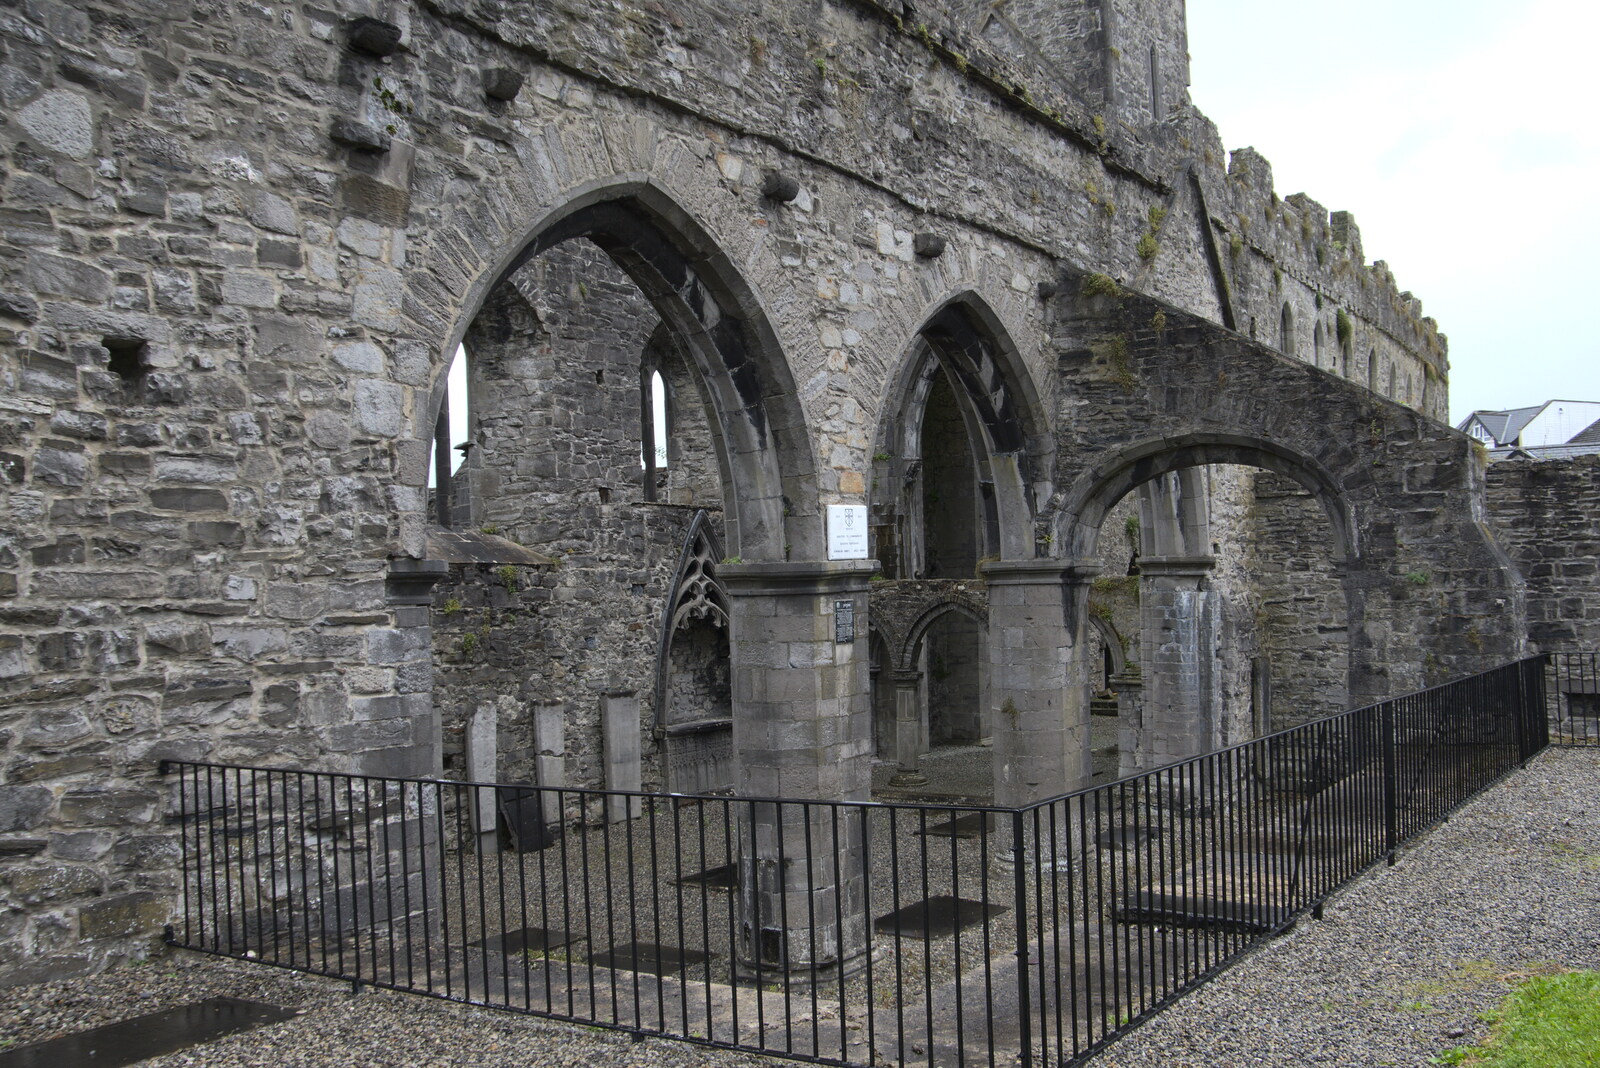 Sligo Abbey from Walks Around Benbulben and Carrowmore, County Sligo, Ireland - 13th August 2021